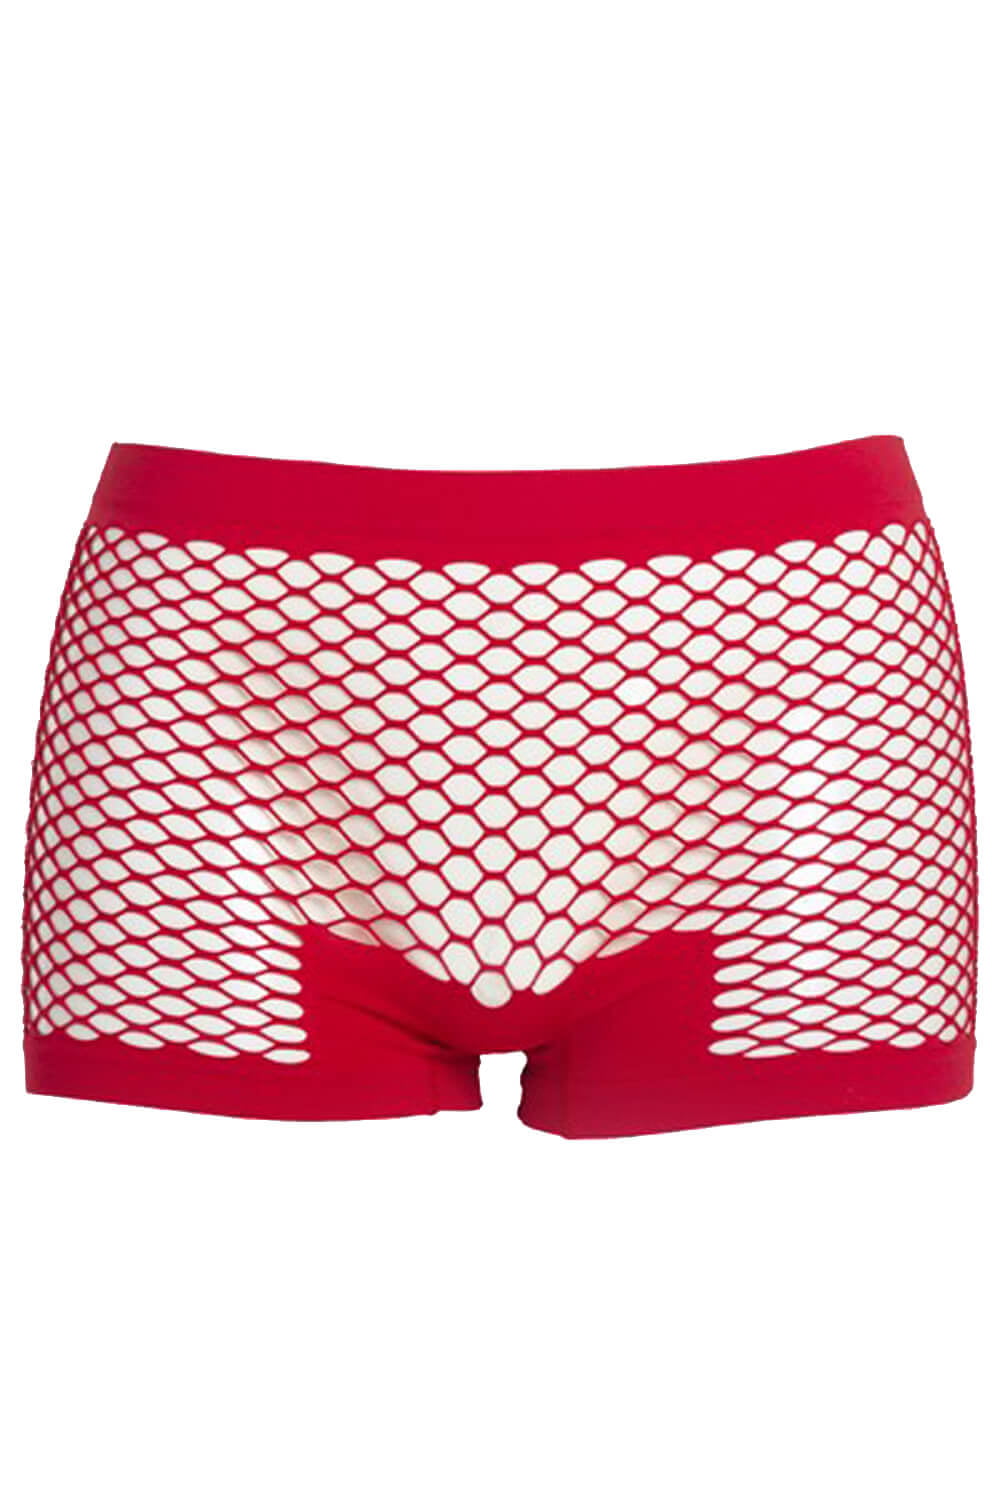 Women's Lingerie Fishnet Seamless Underwear, Neon Mix, 6 Packs 